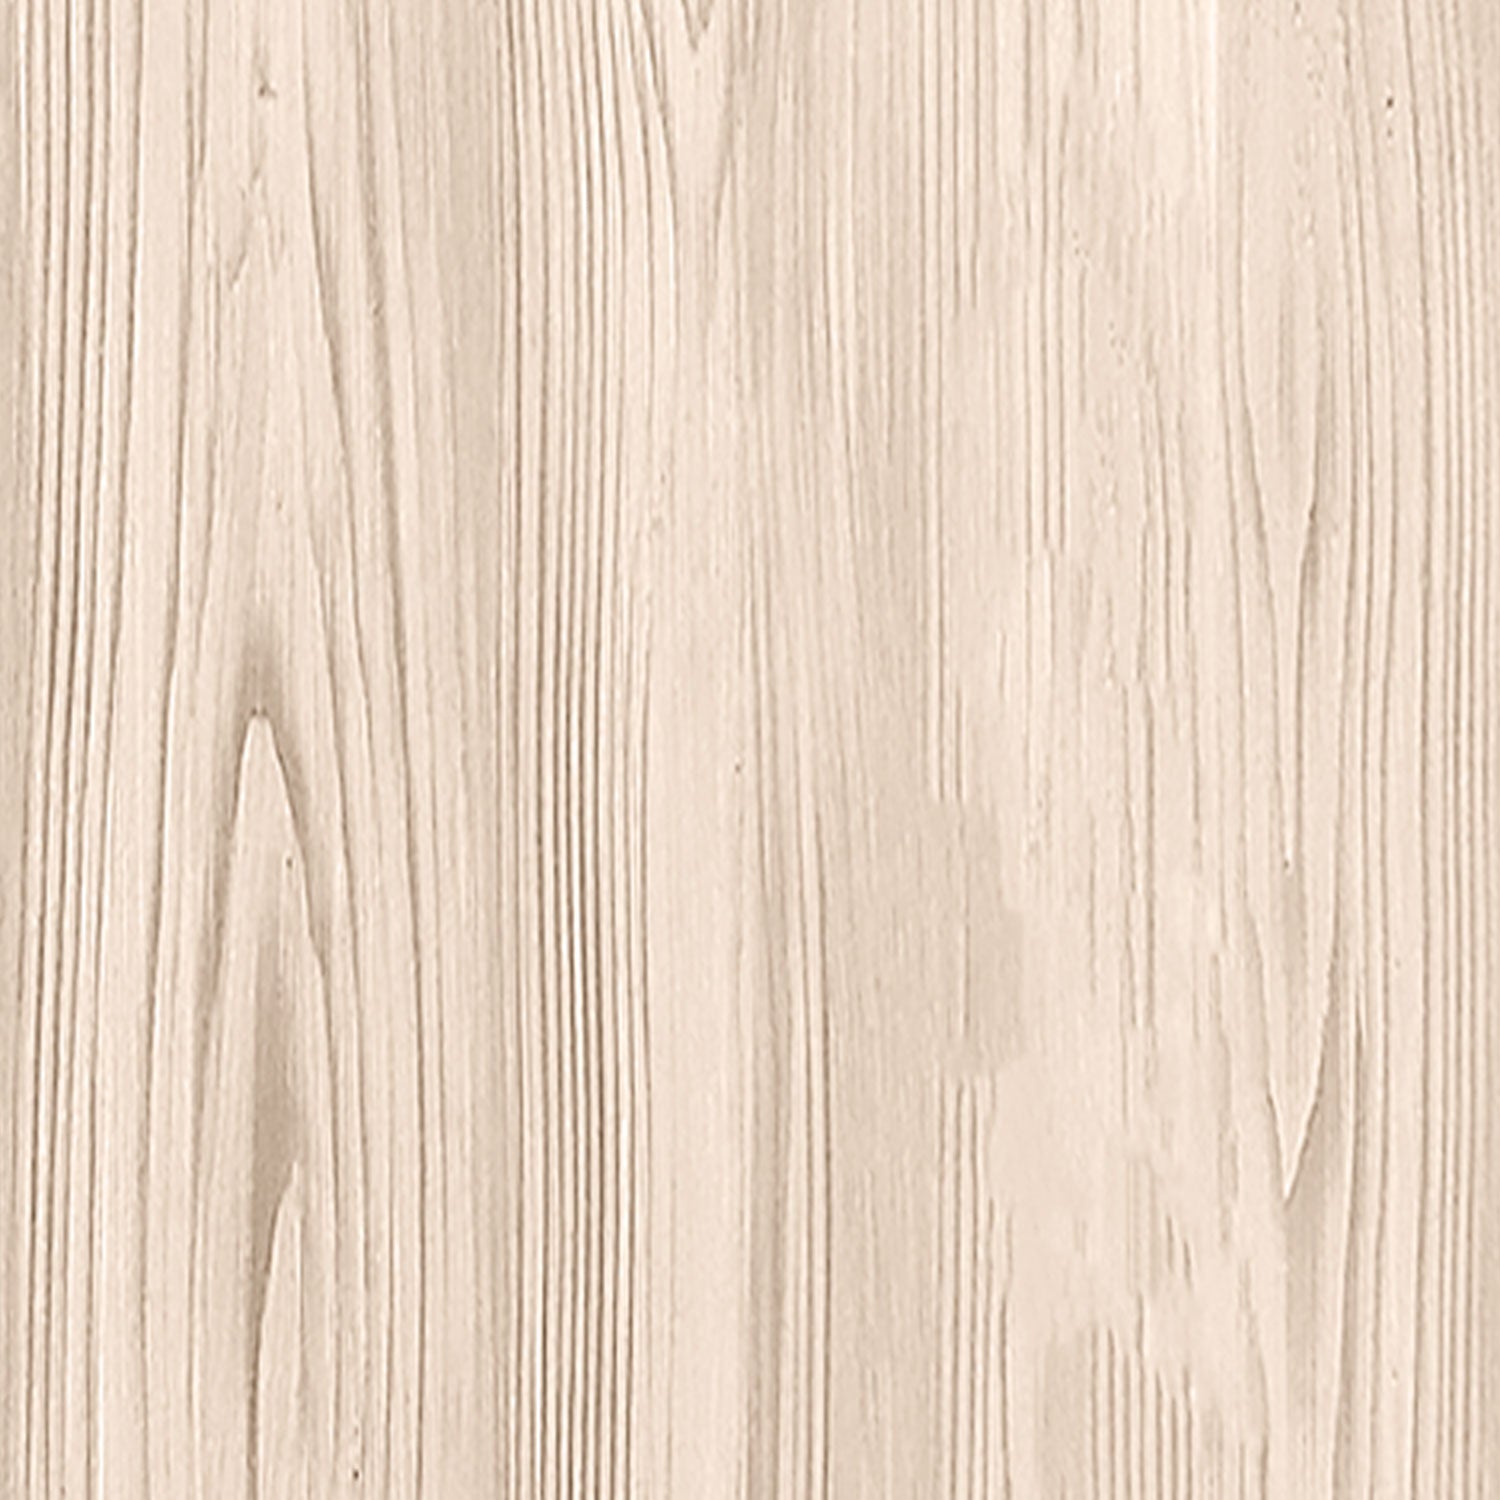 Multi-purpose Wood'n Kit (Large) - White Oak - Exterior Top Coat